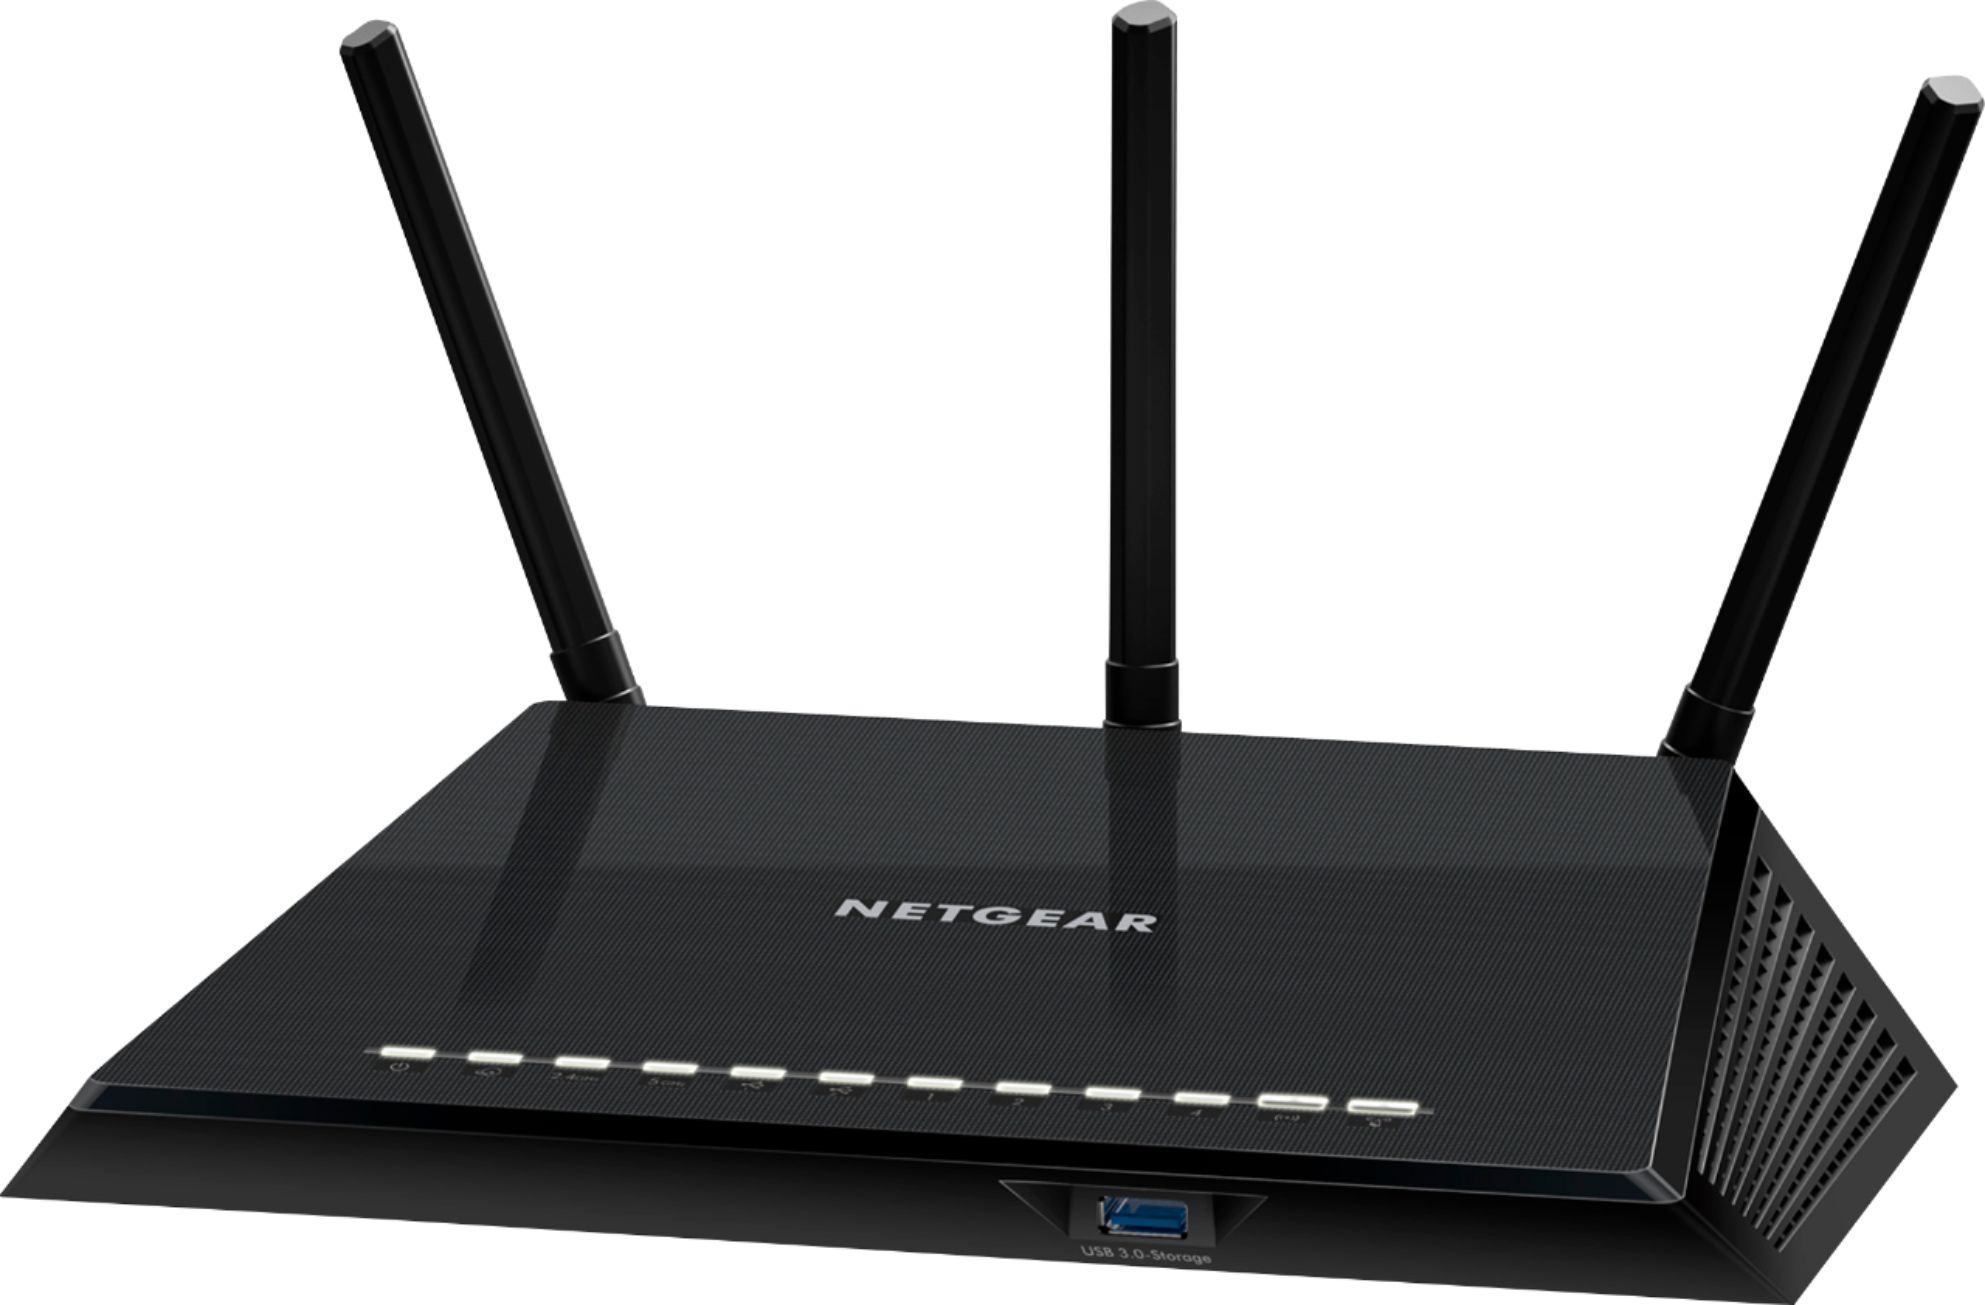 NETGEAR AC1750 Wi-Fi 5 Router Black R6400-100NAS - Buy